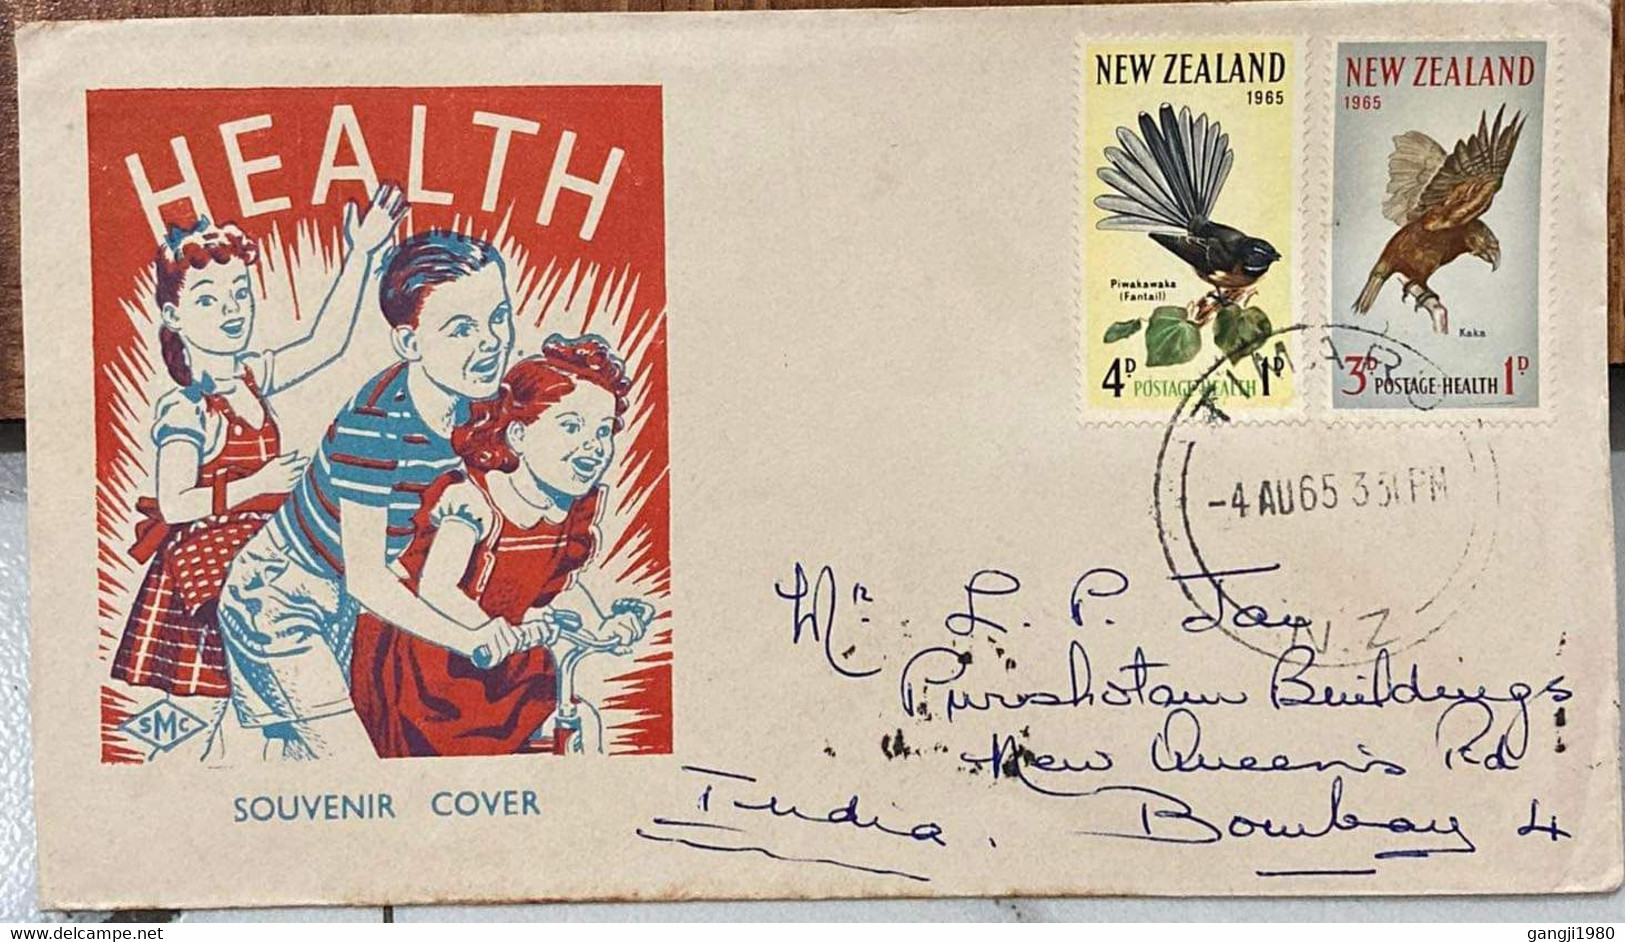 NEW ZEALAND,1965, Health, PRIVATE FDC ,TO ,INDIA,TO ADDRESS, L.P.JAI ,CRICKETER,CRICKET,Timaro,POST MARK. - Briefe U. Dokumente